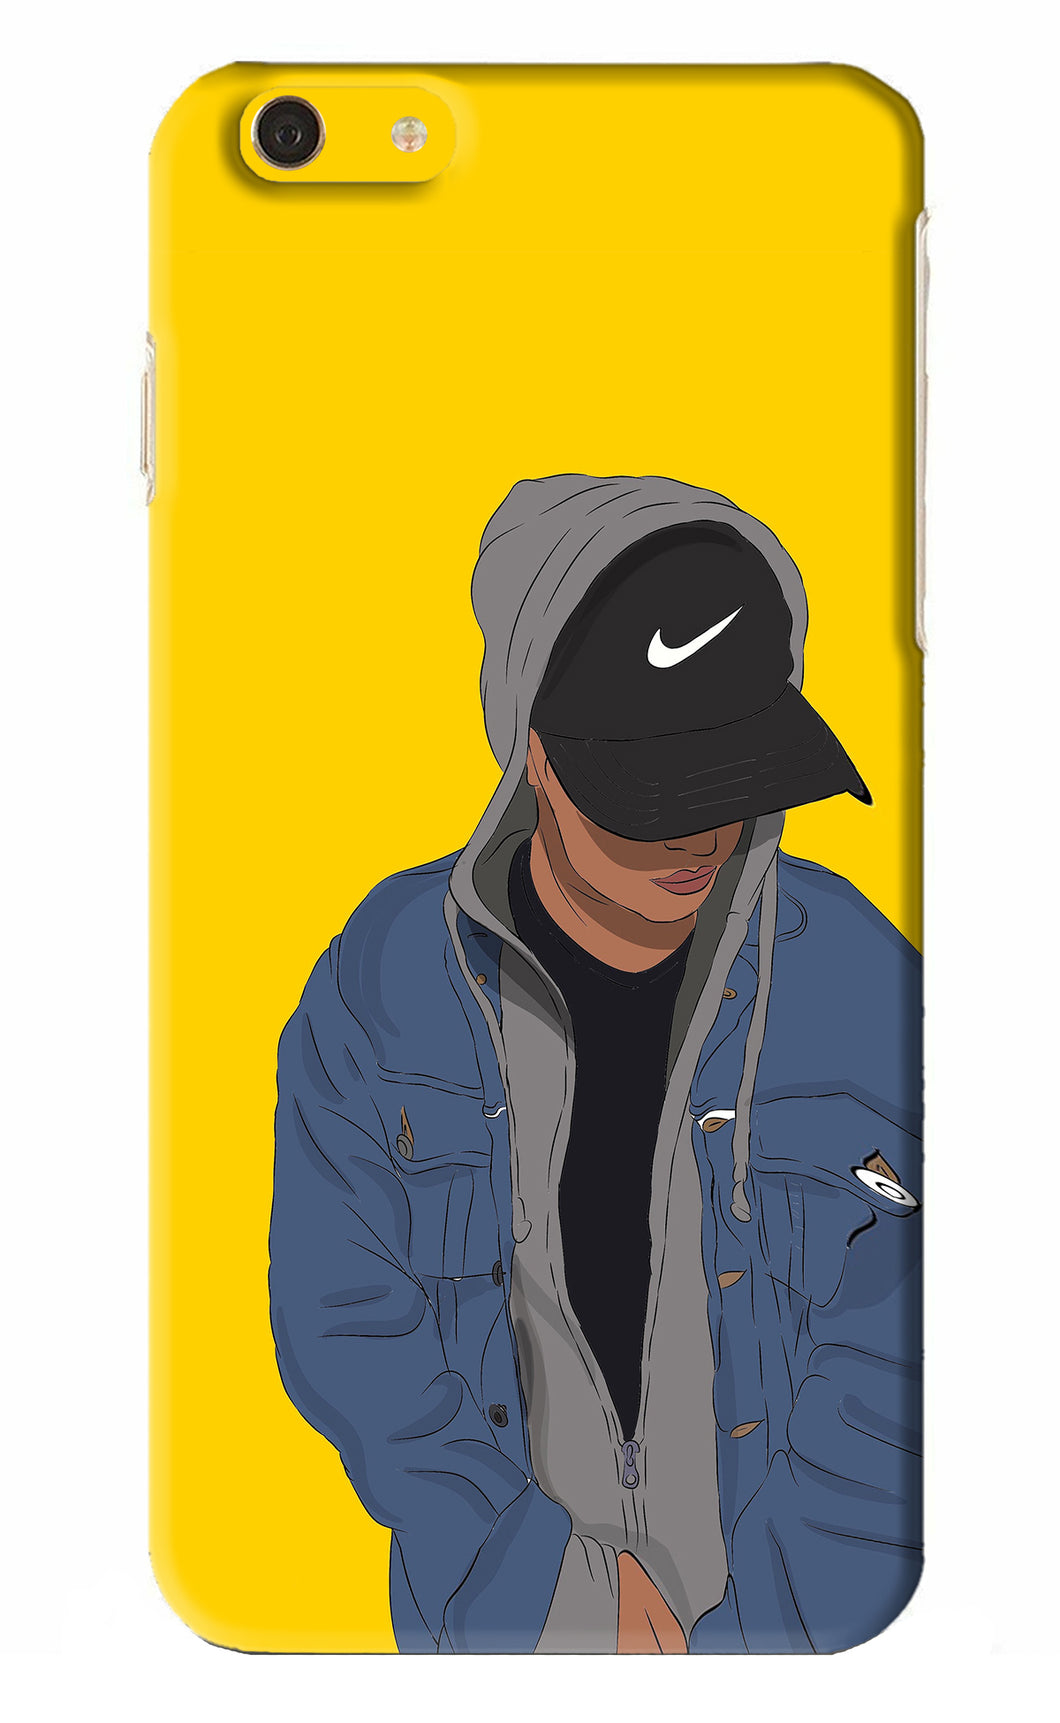 Nike Boy iPhone 6S Plus Back Skin Wrap